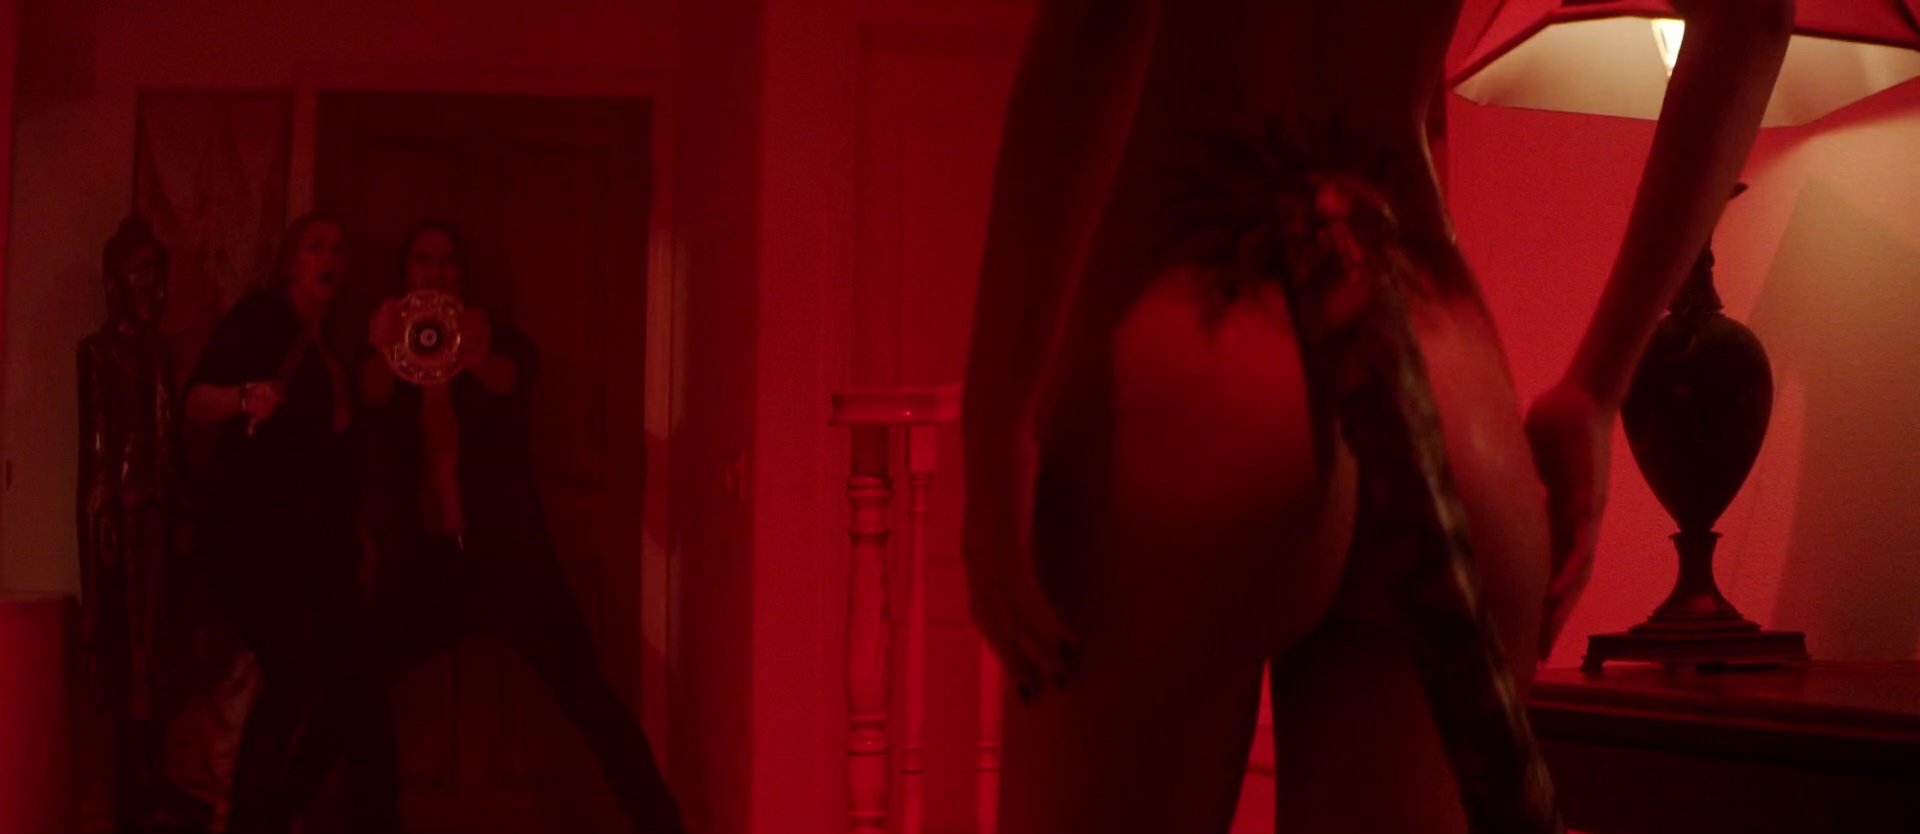 Милена Горум nude pics.